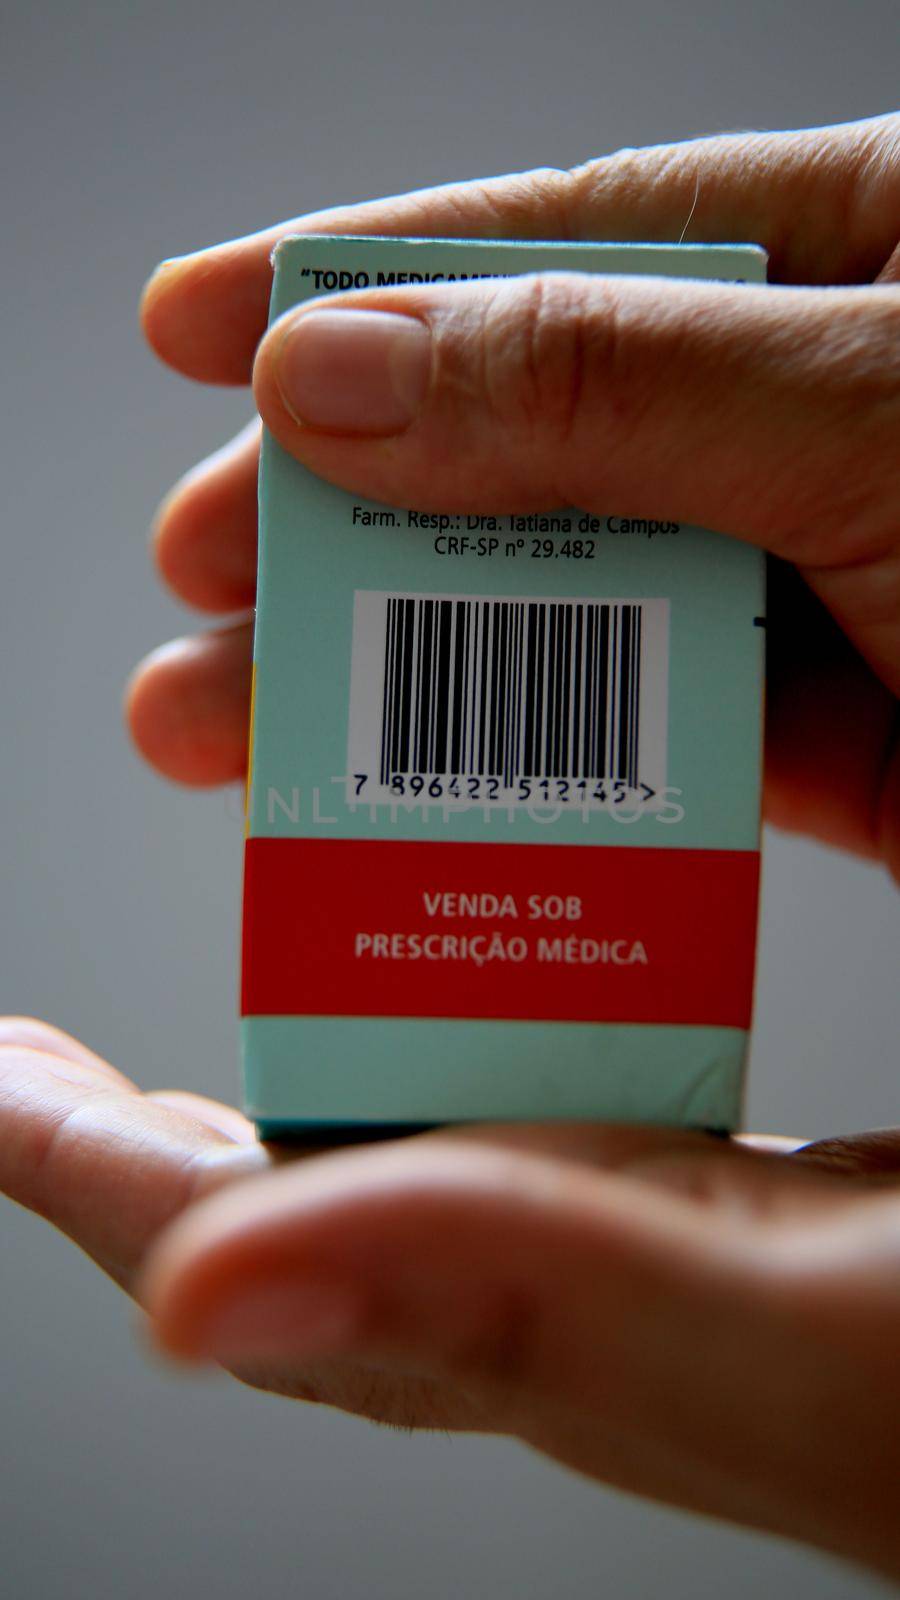 salvador, bahia / brazil - june 10, 2020: barcode is seen in a genrioco medicine box in the city of Salvador.

